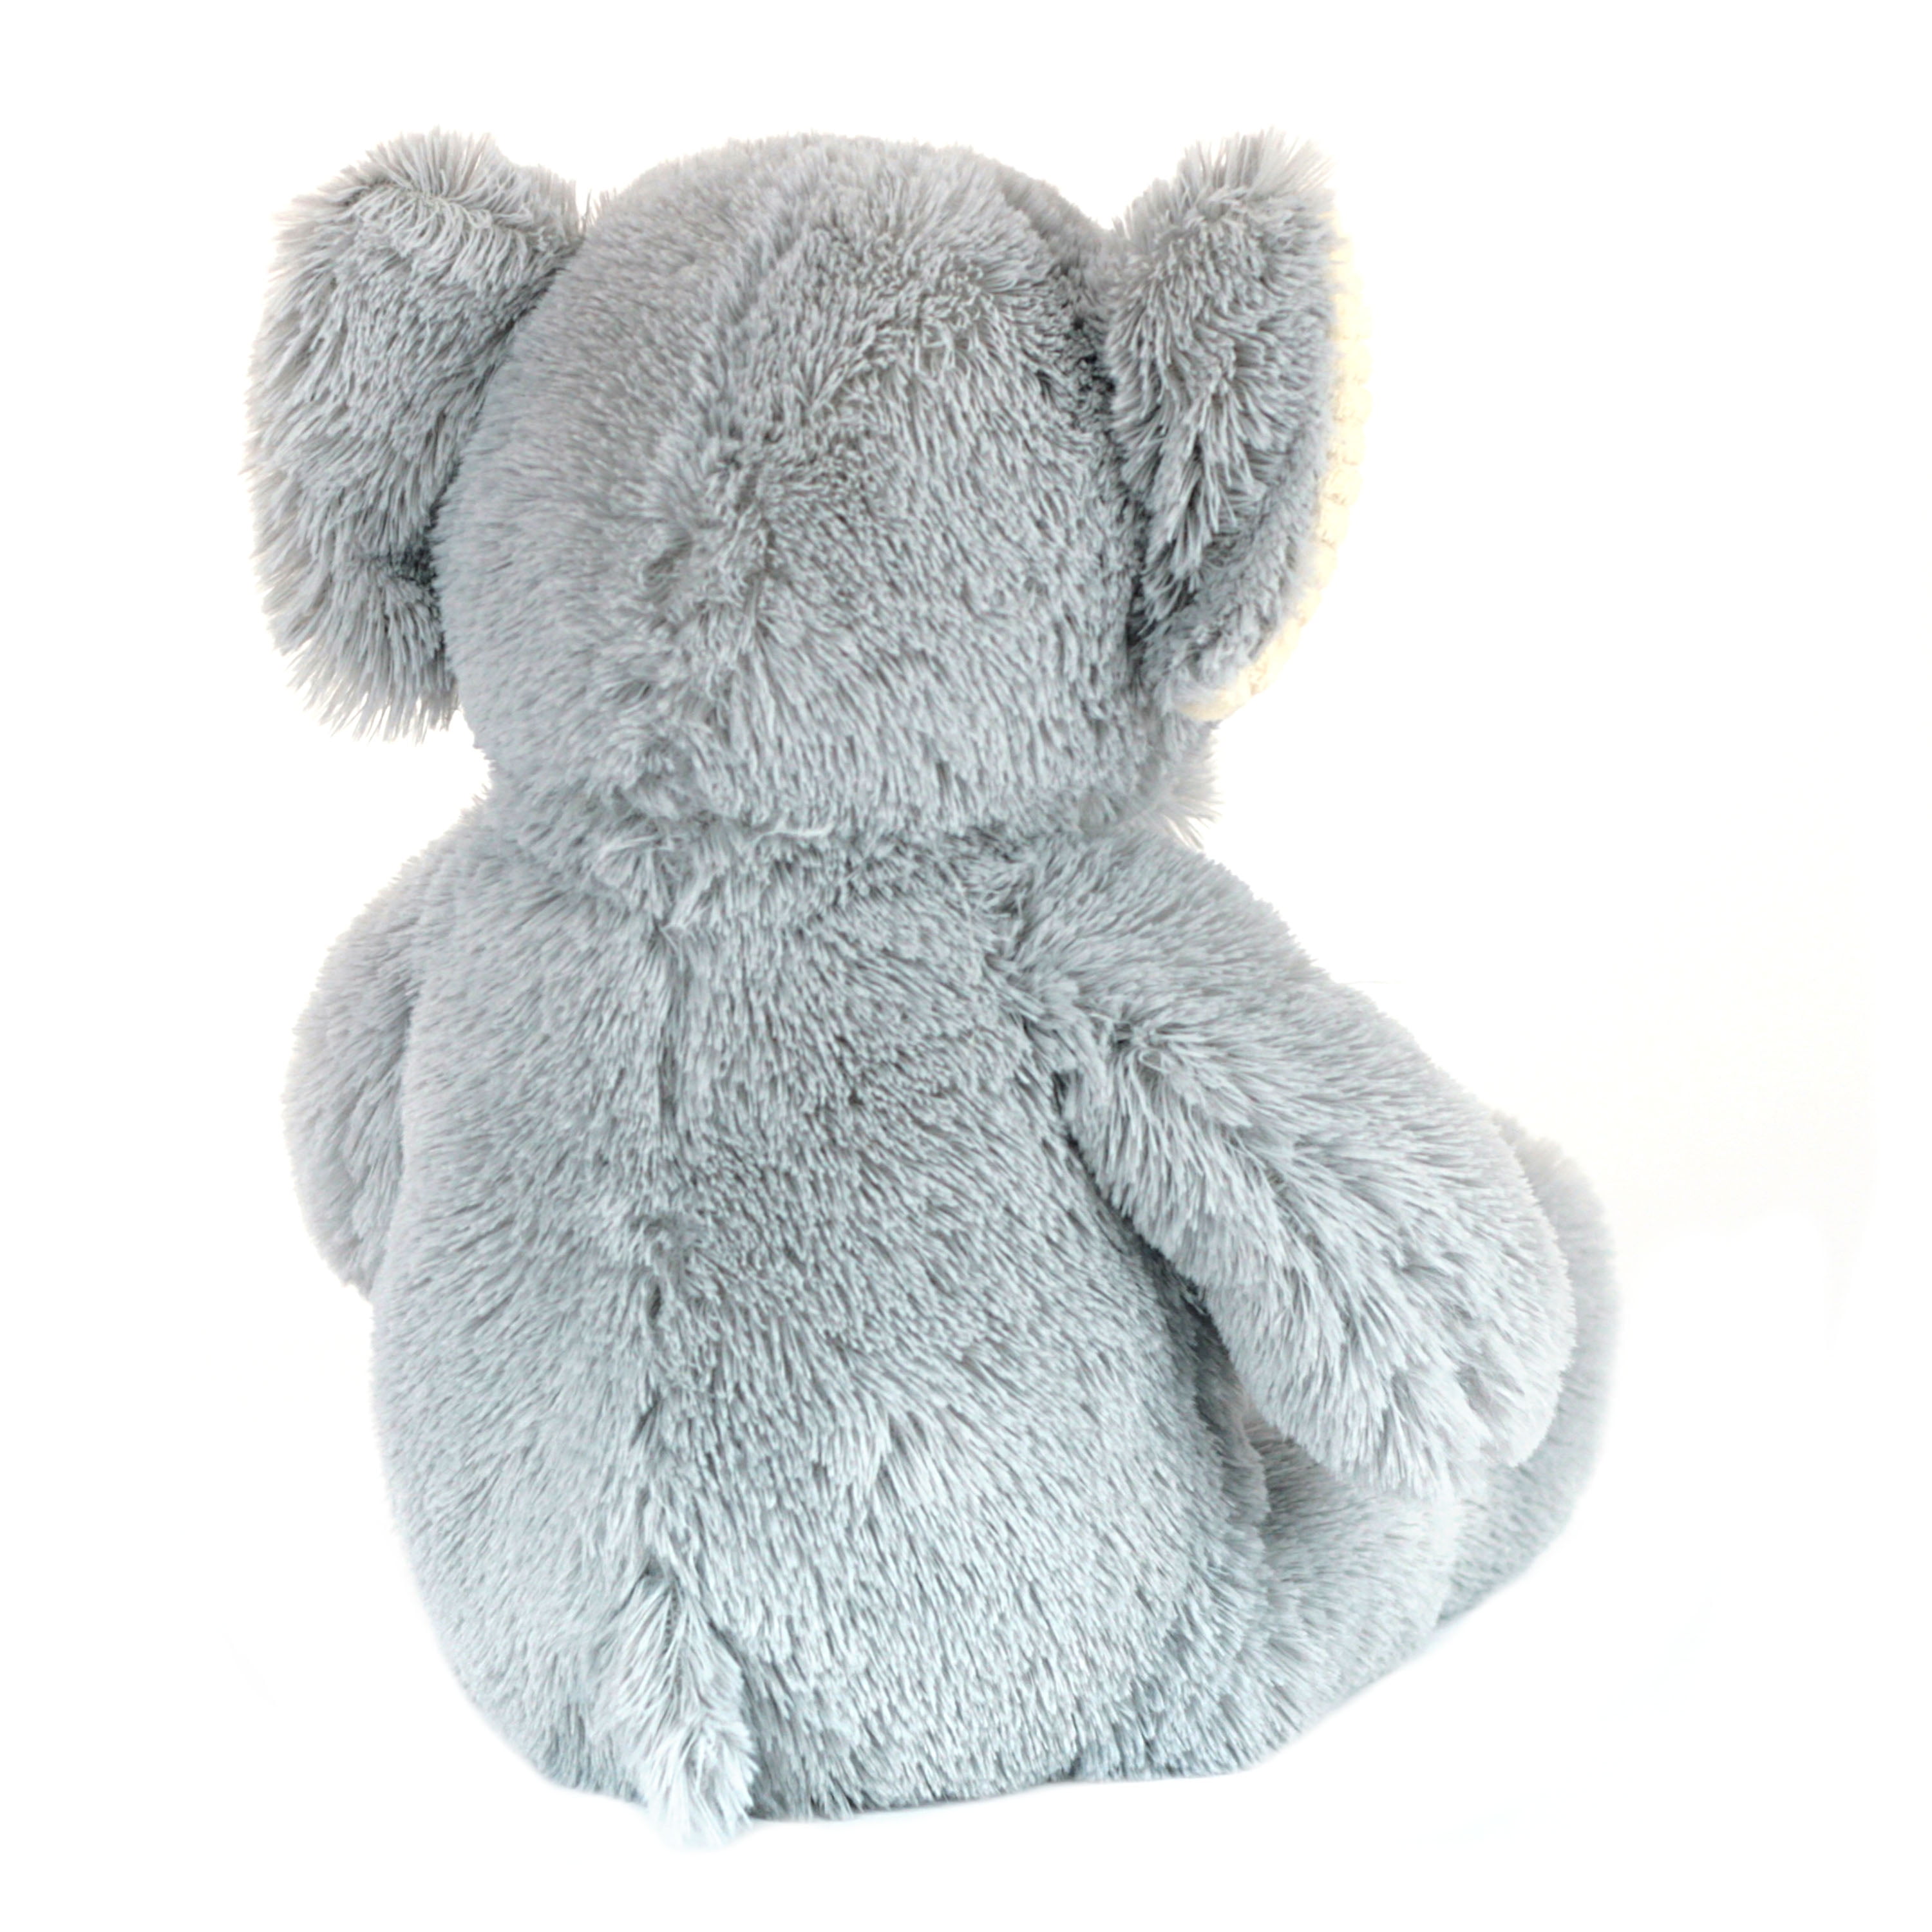 Dan Dee Plush Fuzzy Jungle Elephant 24 Inch Large Stuffed Animal PAL for sale online 